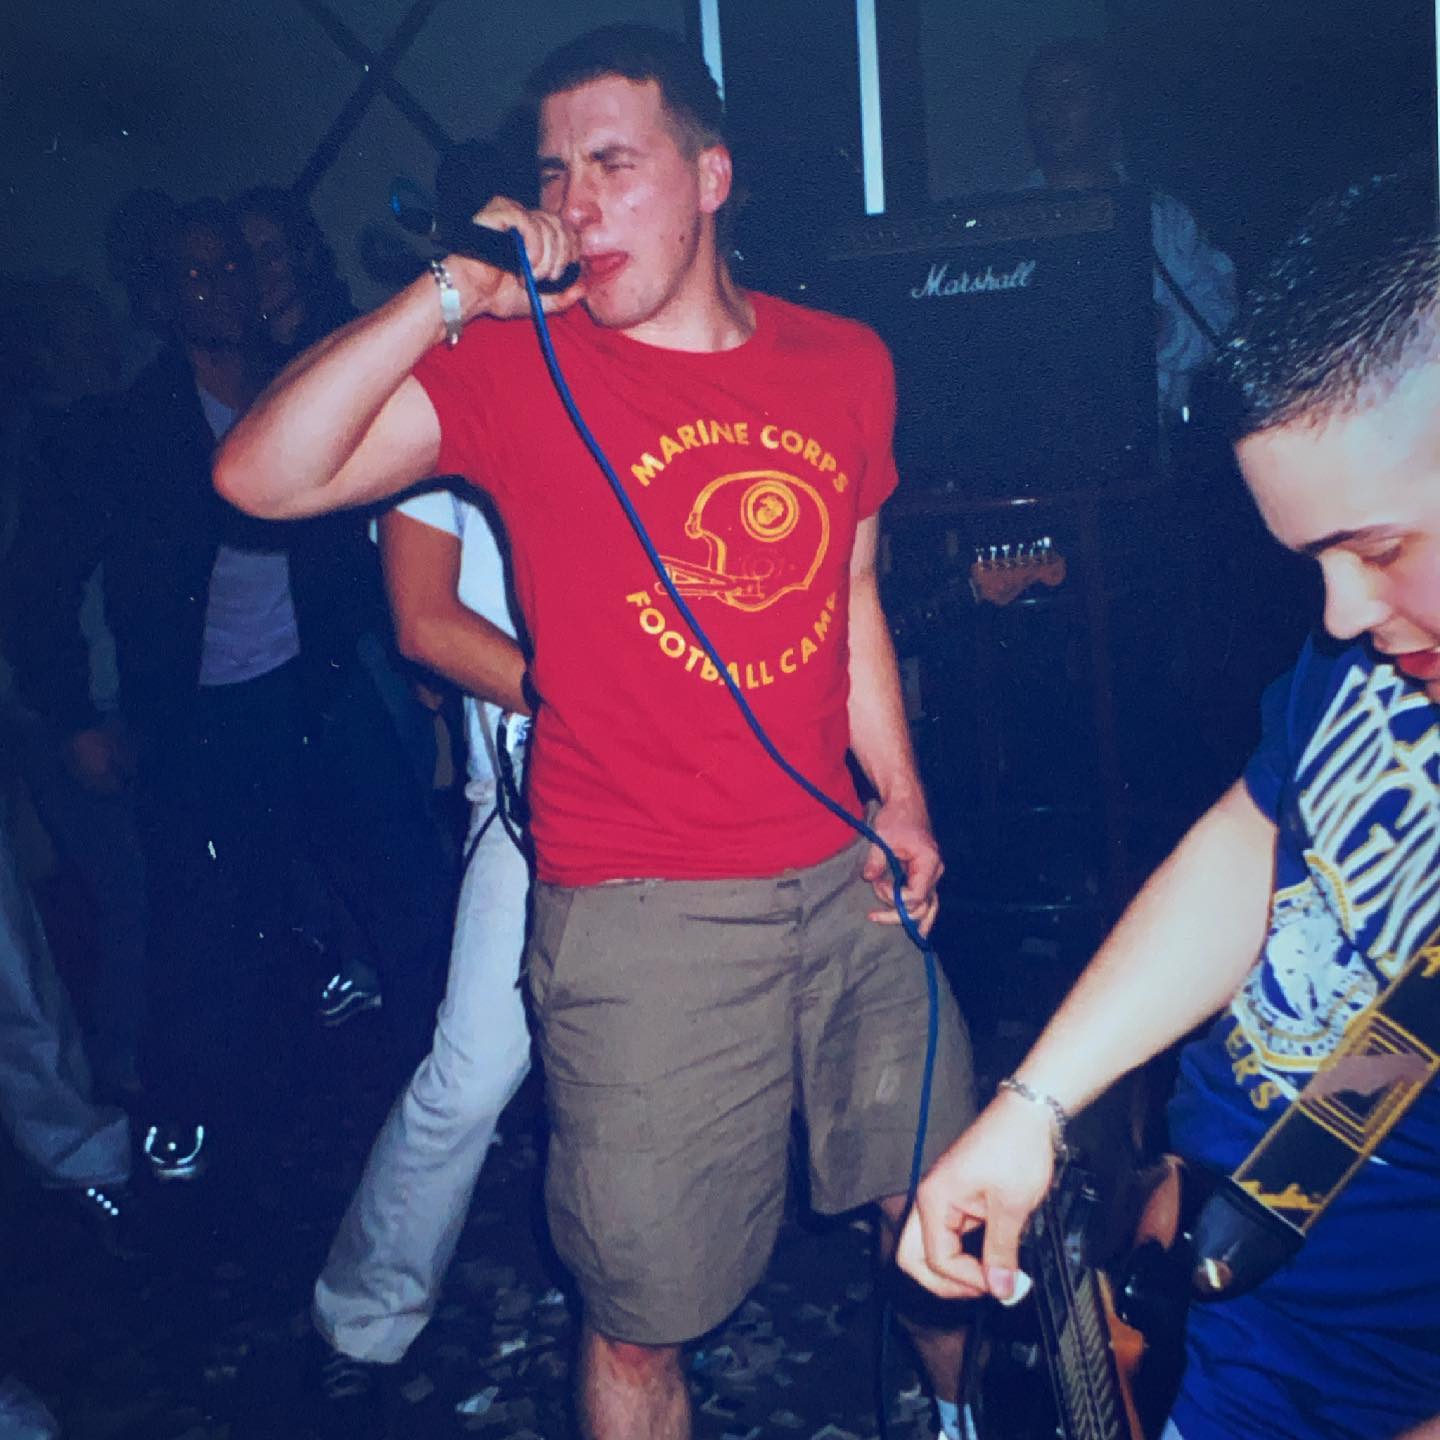 Eyeball - Eureka, Zwolle (NL) - 2 October 1998 #straightedge #hardcore #punkrock #gigpic by @twentylandcrew